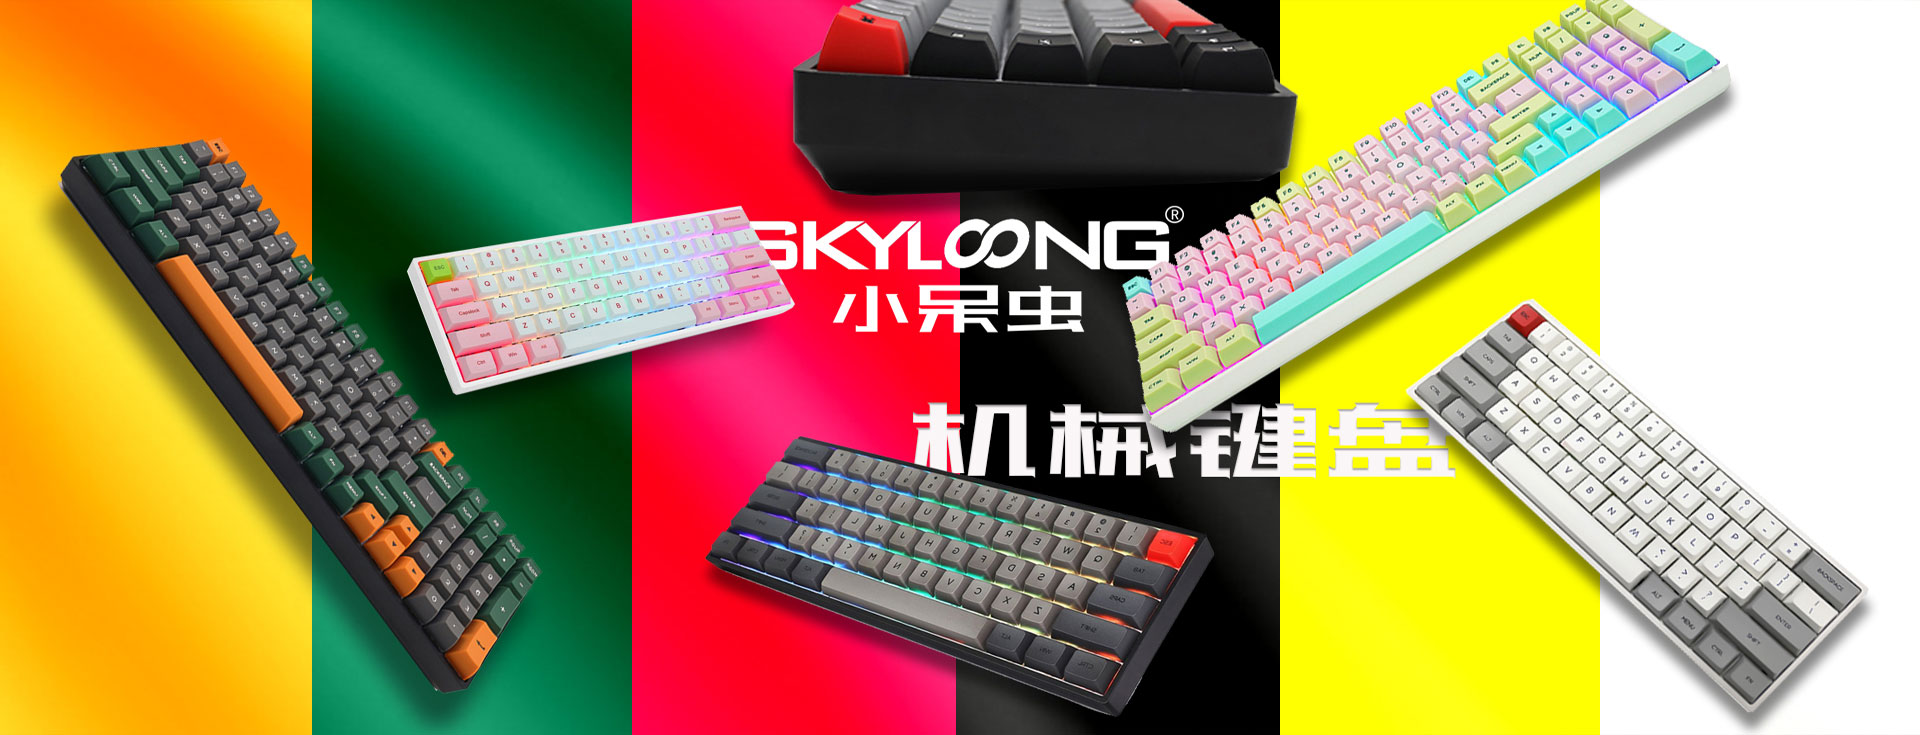 SKYLOONG-机械键盘客制华套件